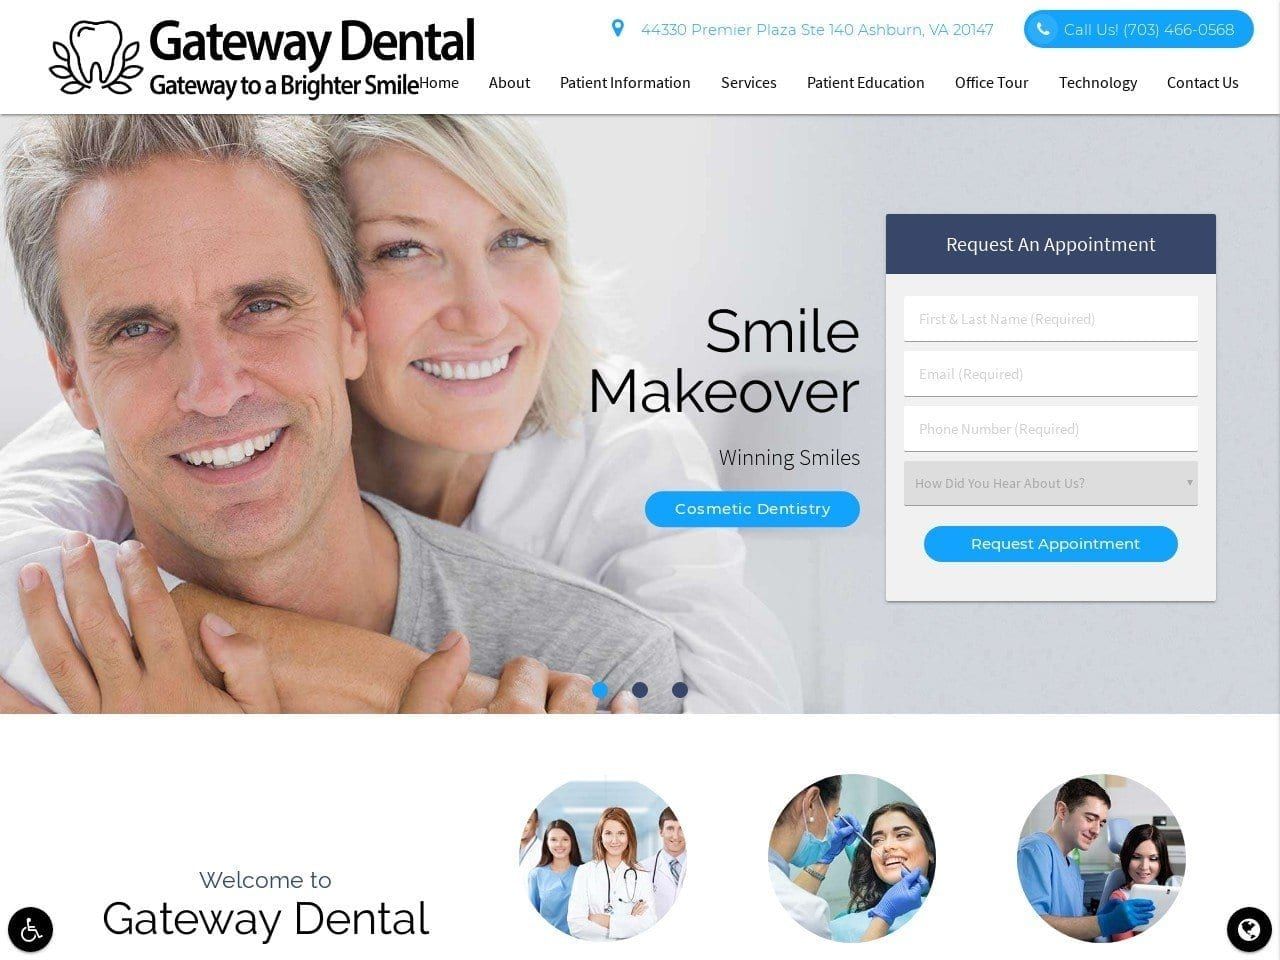 Gateway Dental Website Screenshot from gatewaydental4u.com